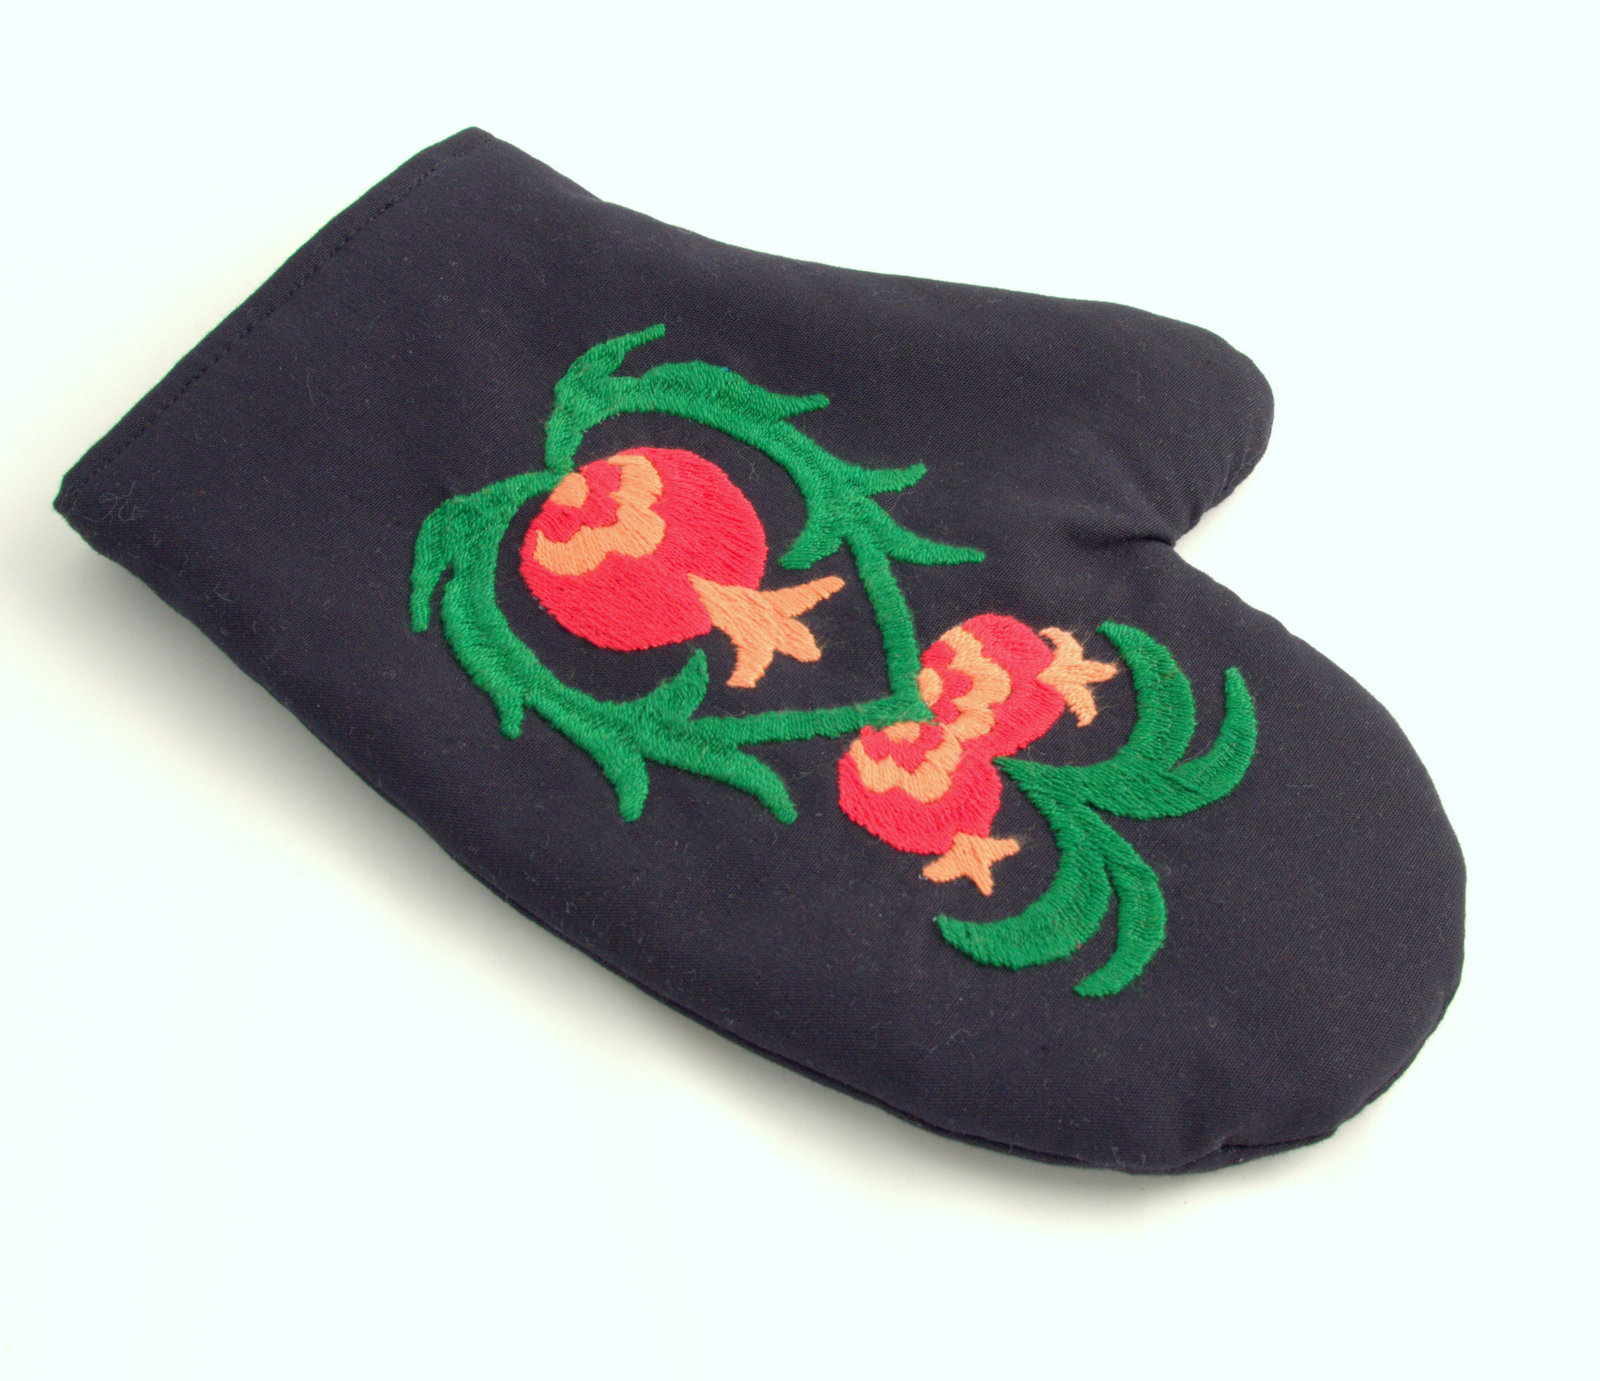 oven glove - handmade in women's cooperative - Tajikistan - embroidered - Gundara